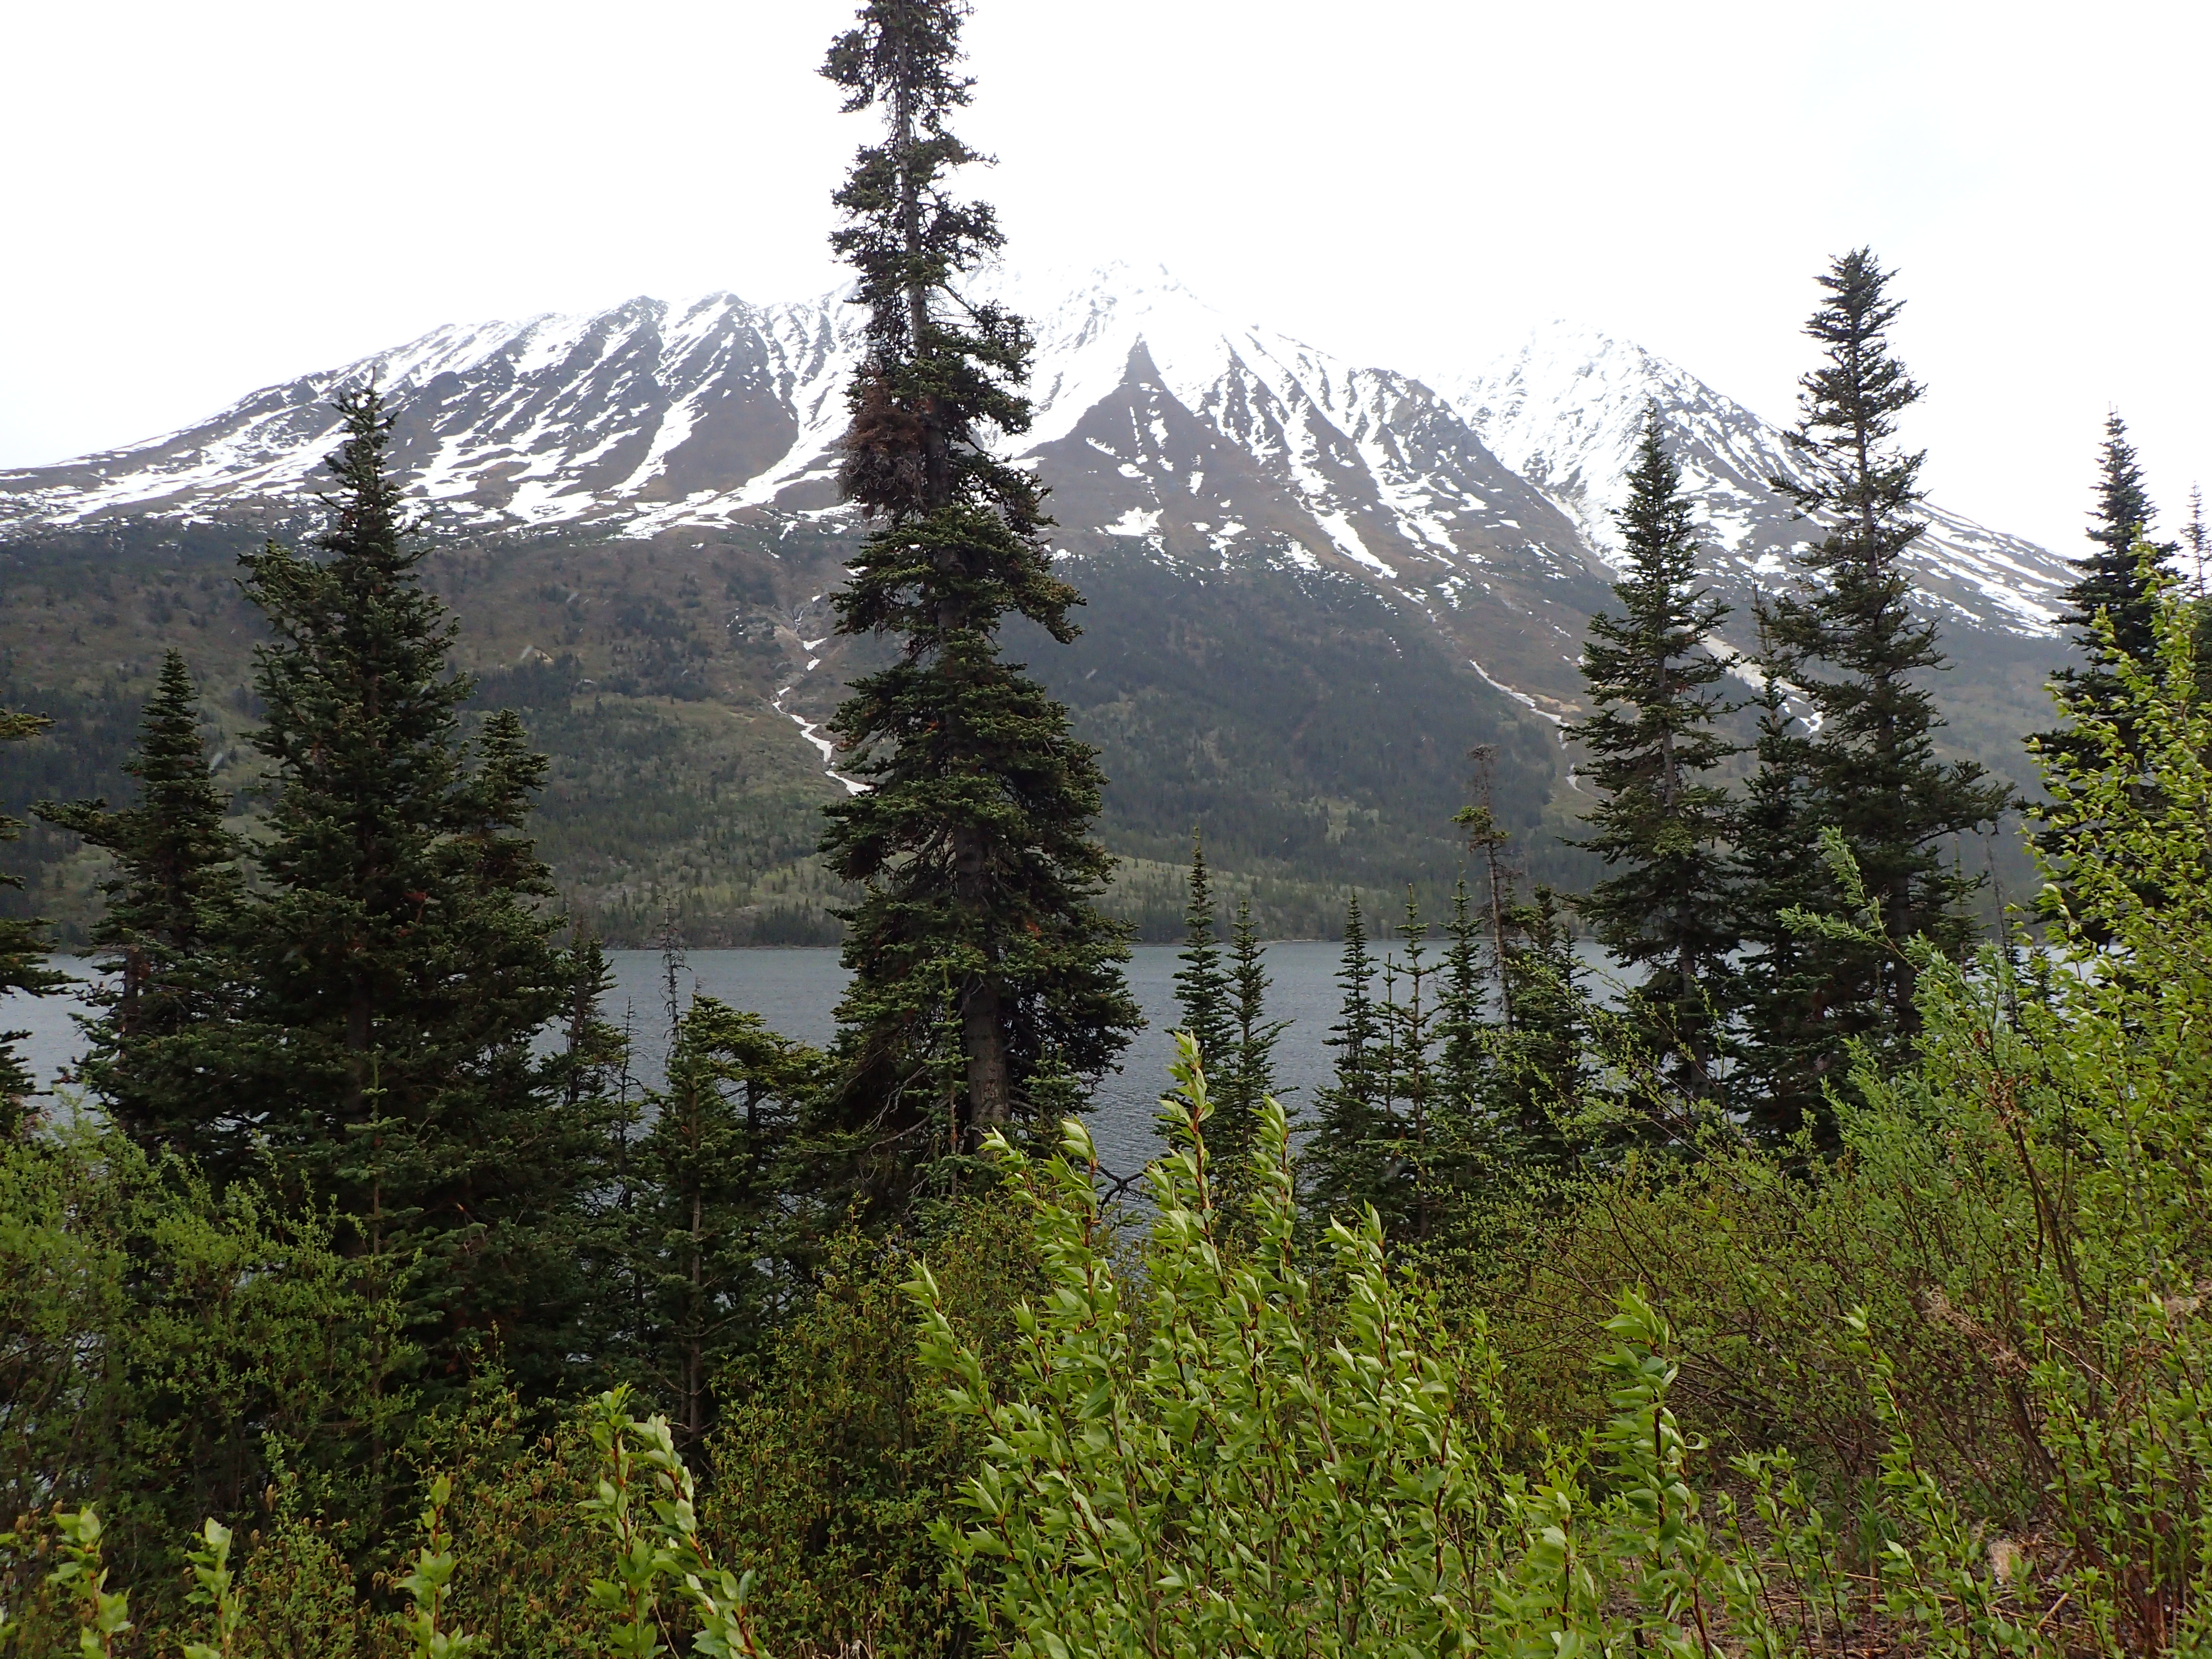 The rugged mountainous of Canada's Yukon Territory.